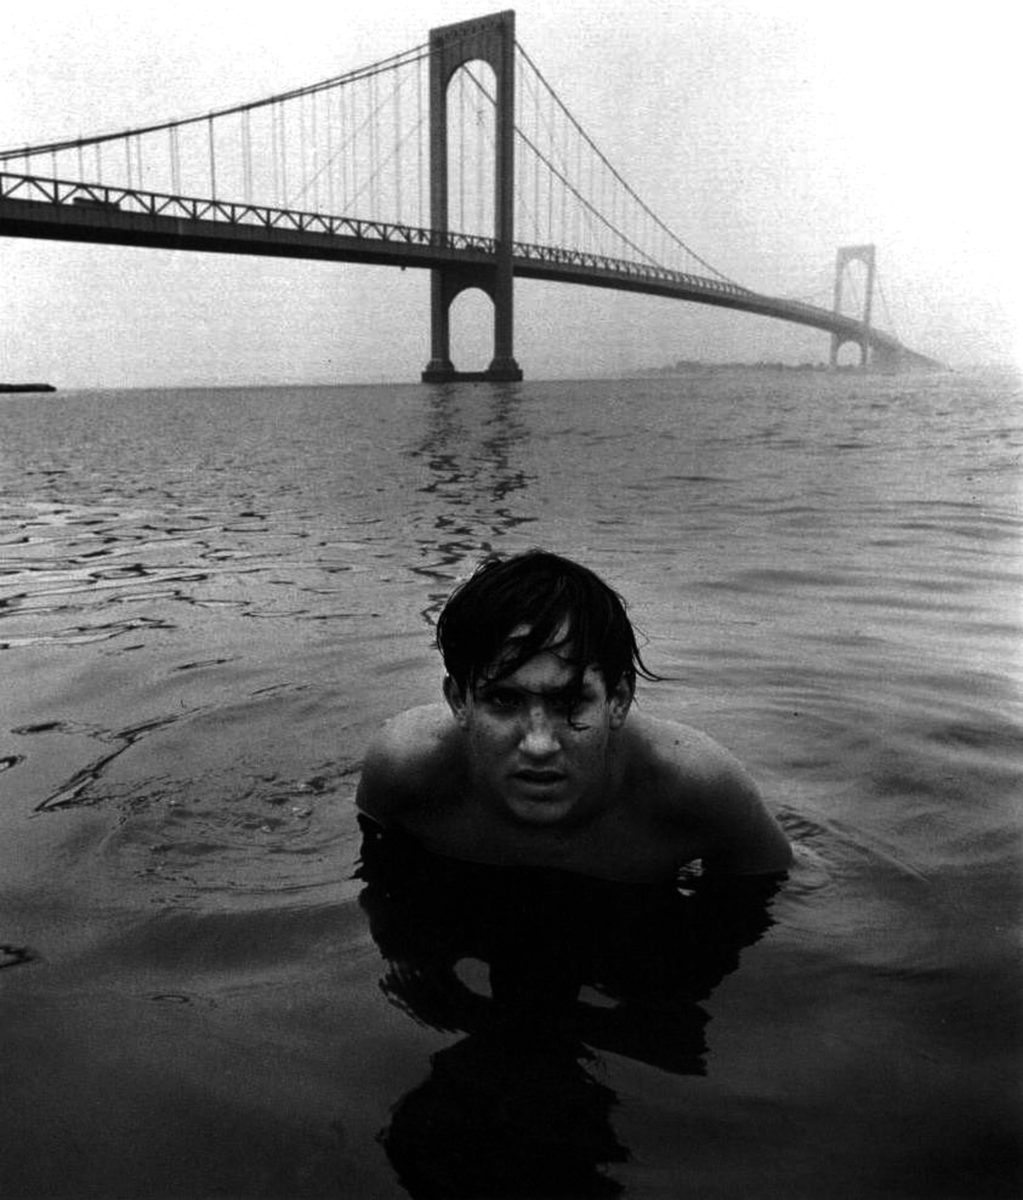 Arthur Tress, Boy in Water under bridge, 1970 with Paci Contemporary